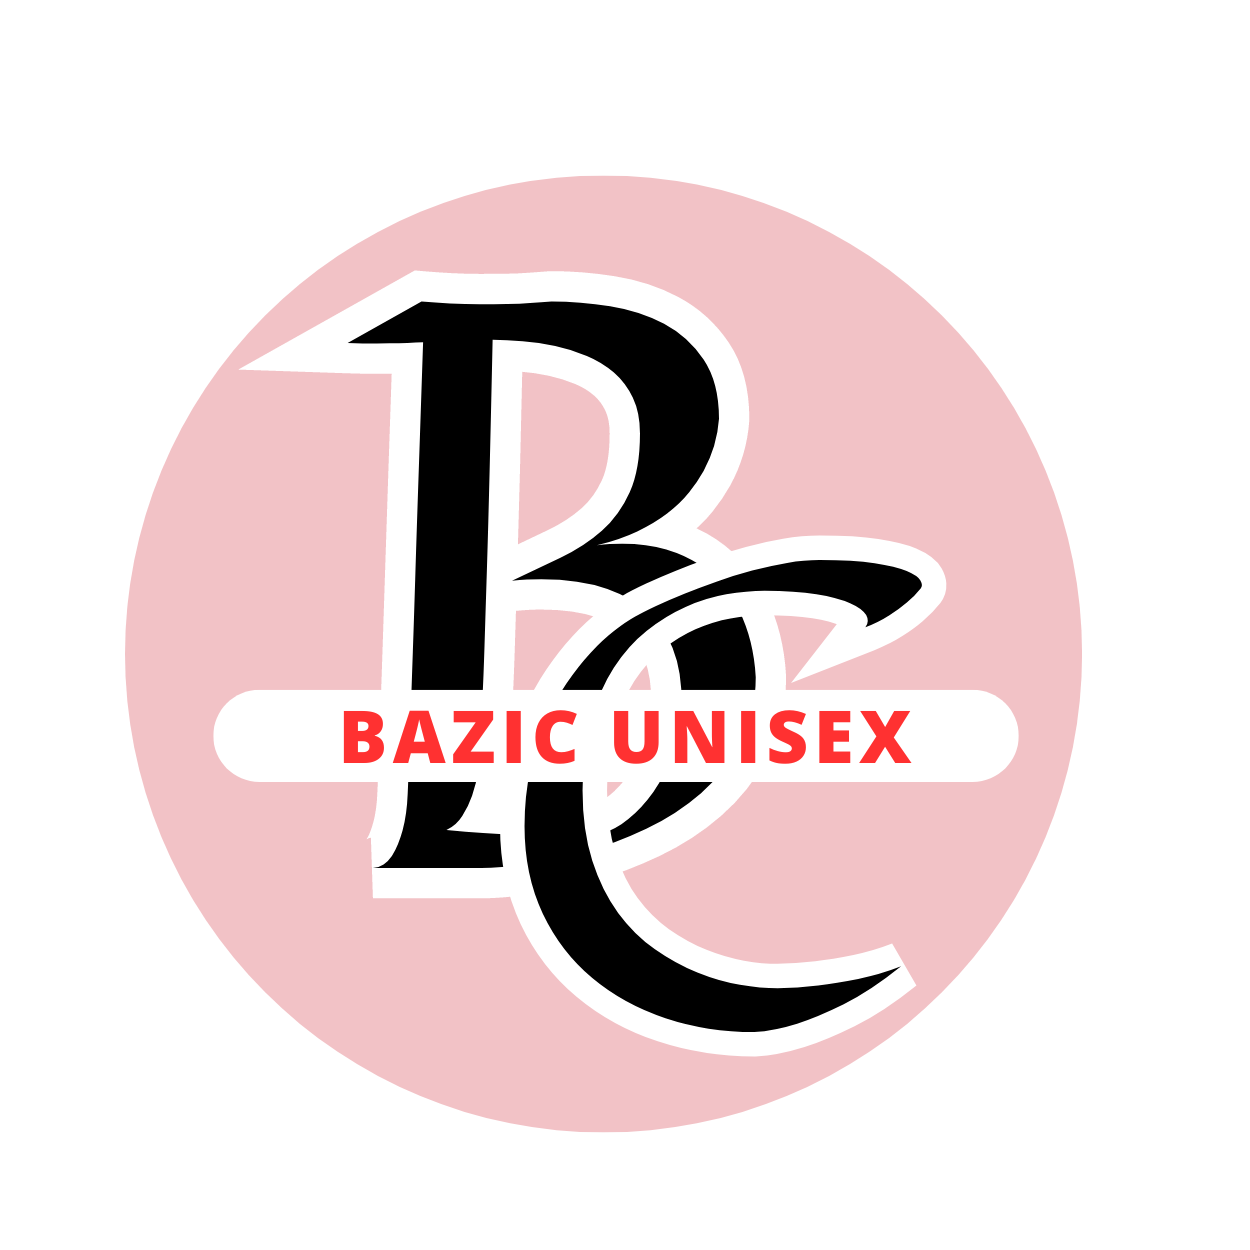 Bazic unisex